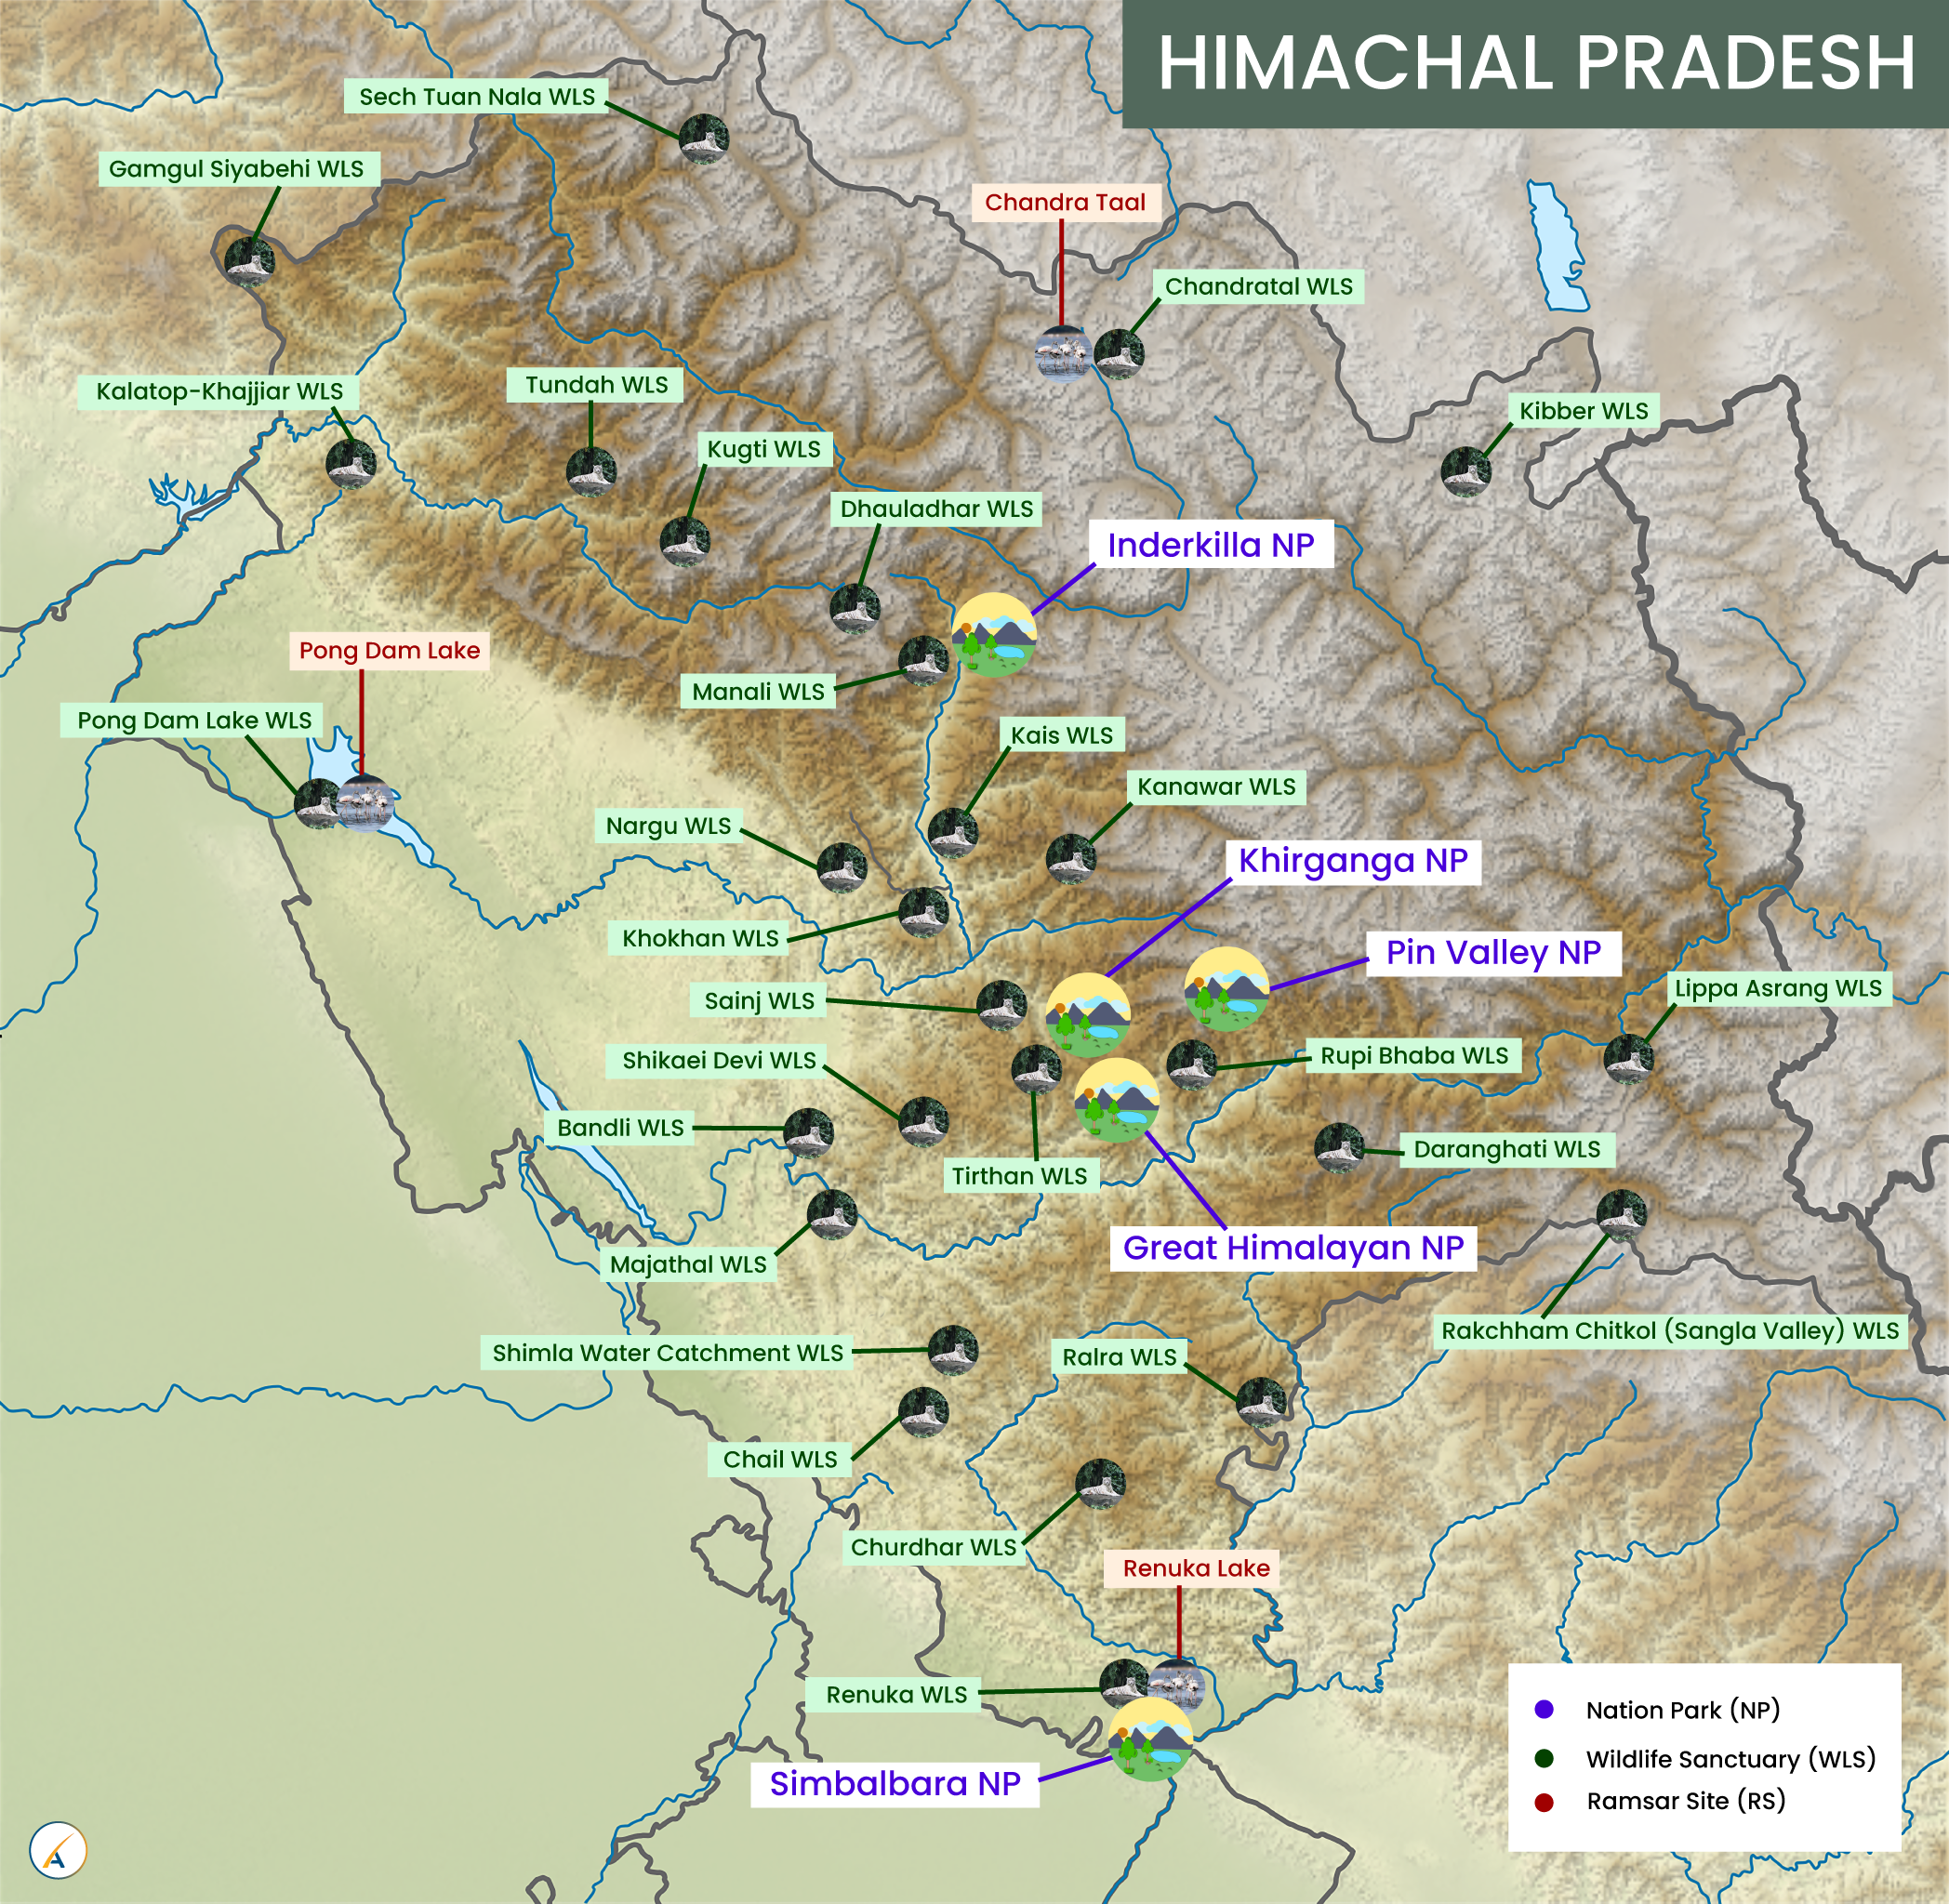 Himachal Pradesh National Parks, Wildlife Sanctuaries & Ramsar Sites Map